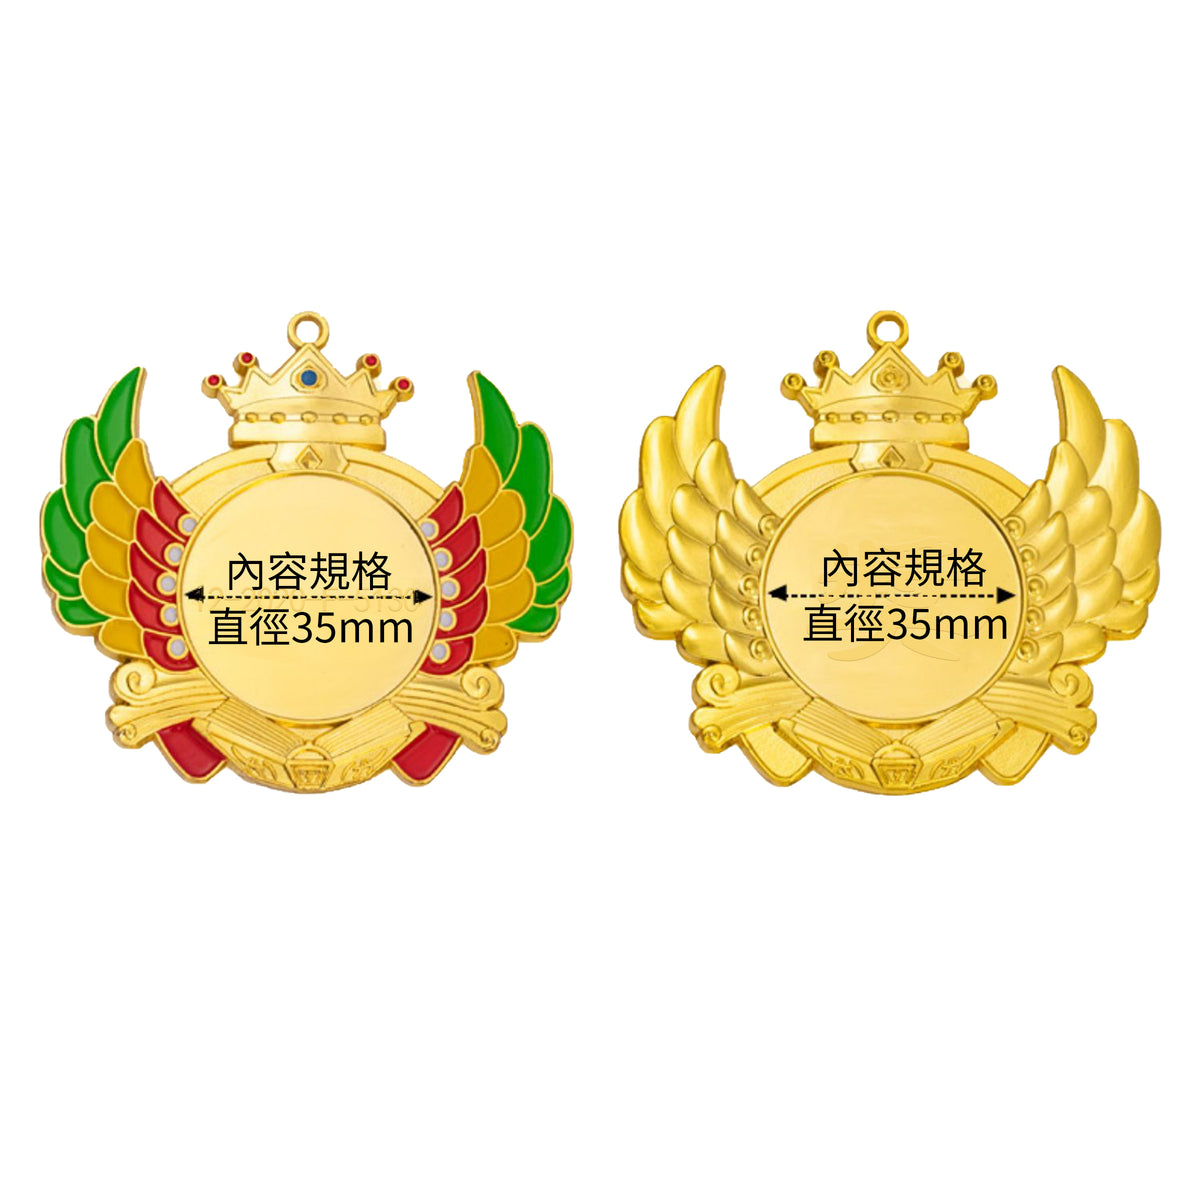 Creative Children And Youth Medals | 皇冠翅膀獎牌訂製 運動會掛牌榮譽獎章